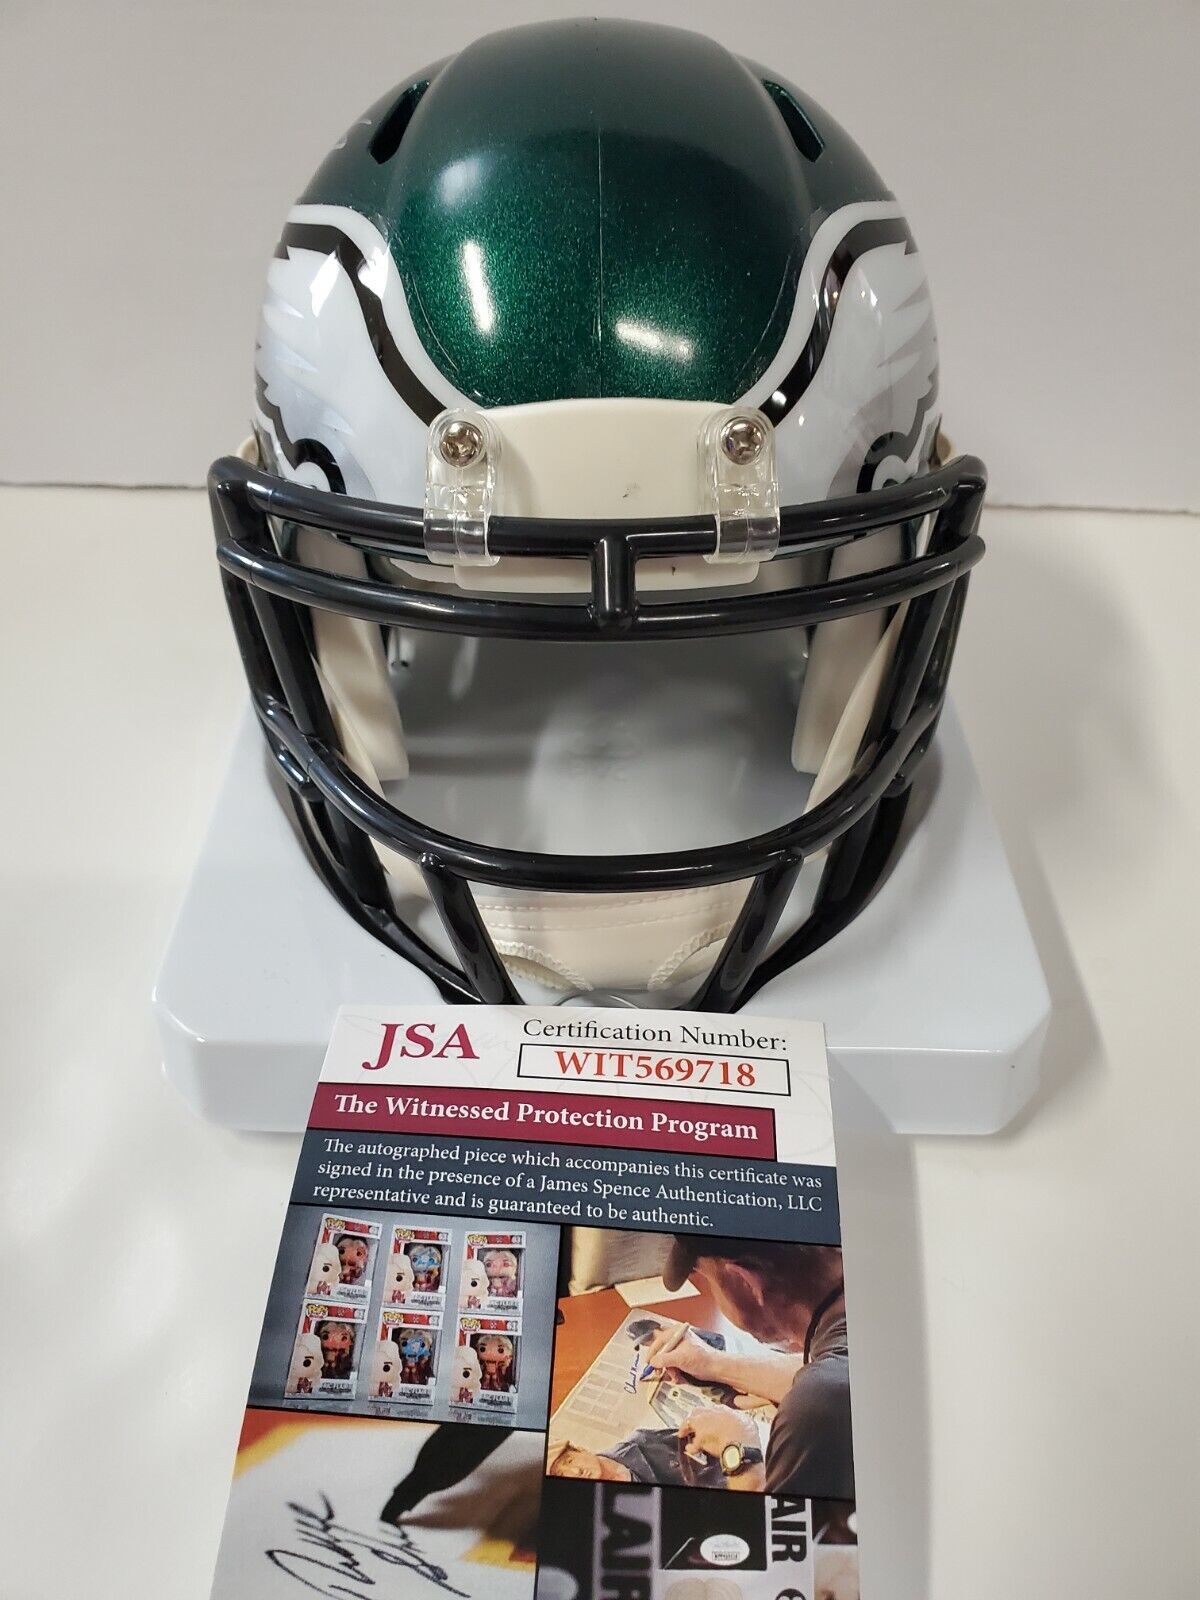 MVP Authentics Philadelphia Eagles Lesean Mccoy Autographed Signed Mini Helmet Jsa Coa 116.10 sports jersey framing , jersey framing